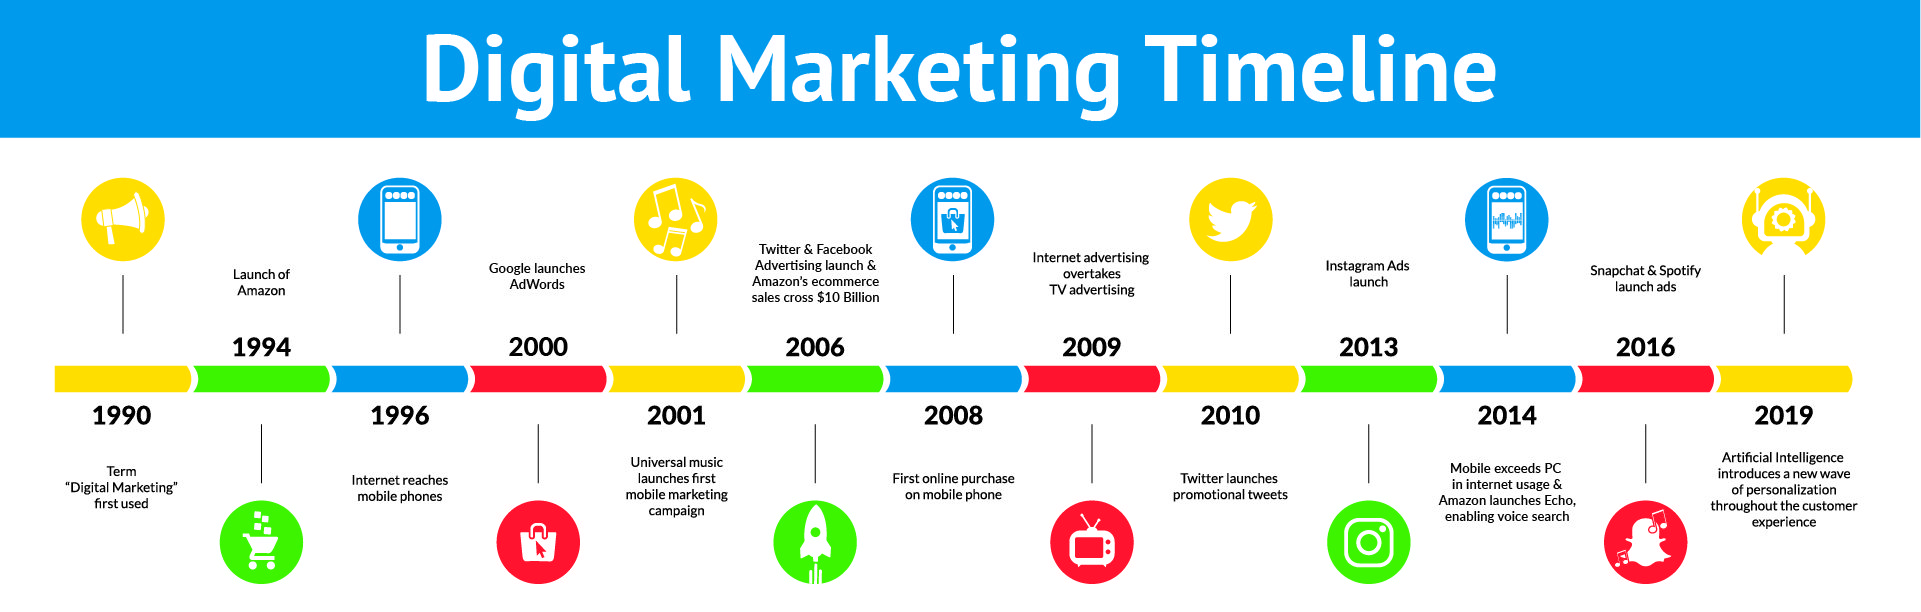 Infographic Digital Marketing Timeline - ROI Revolution